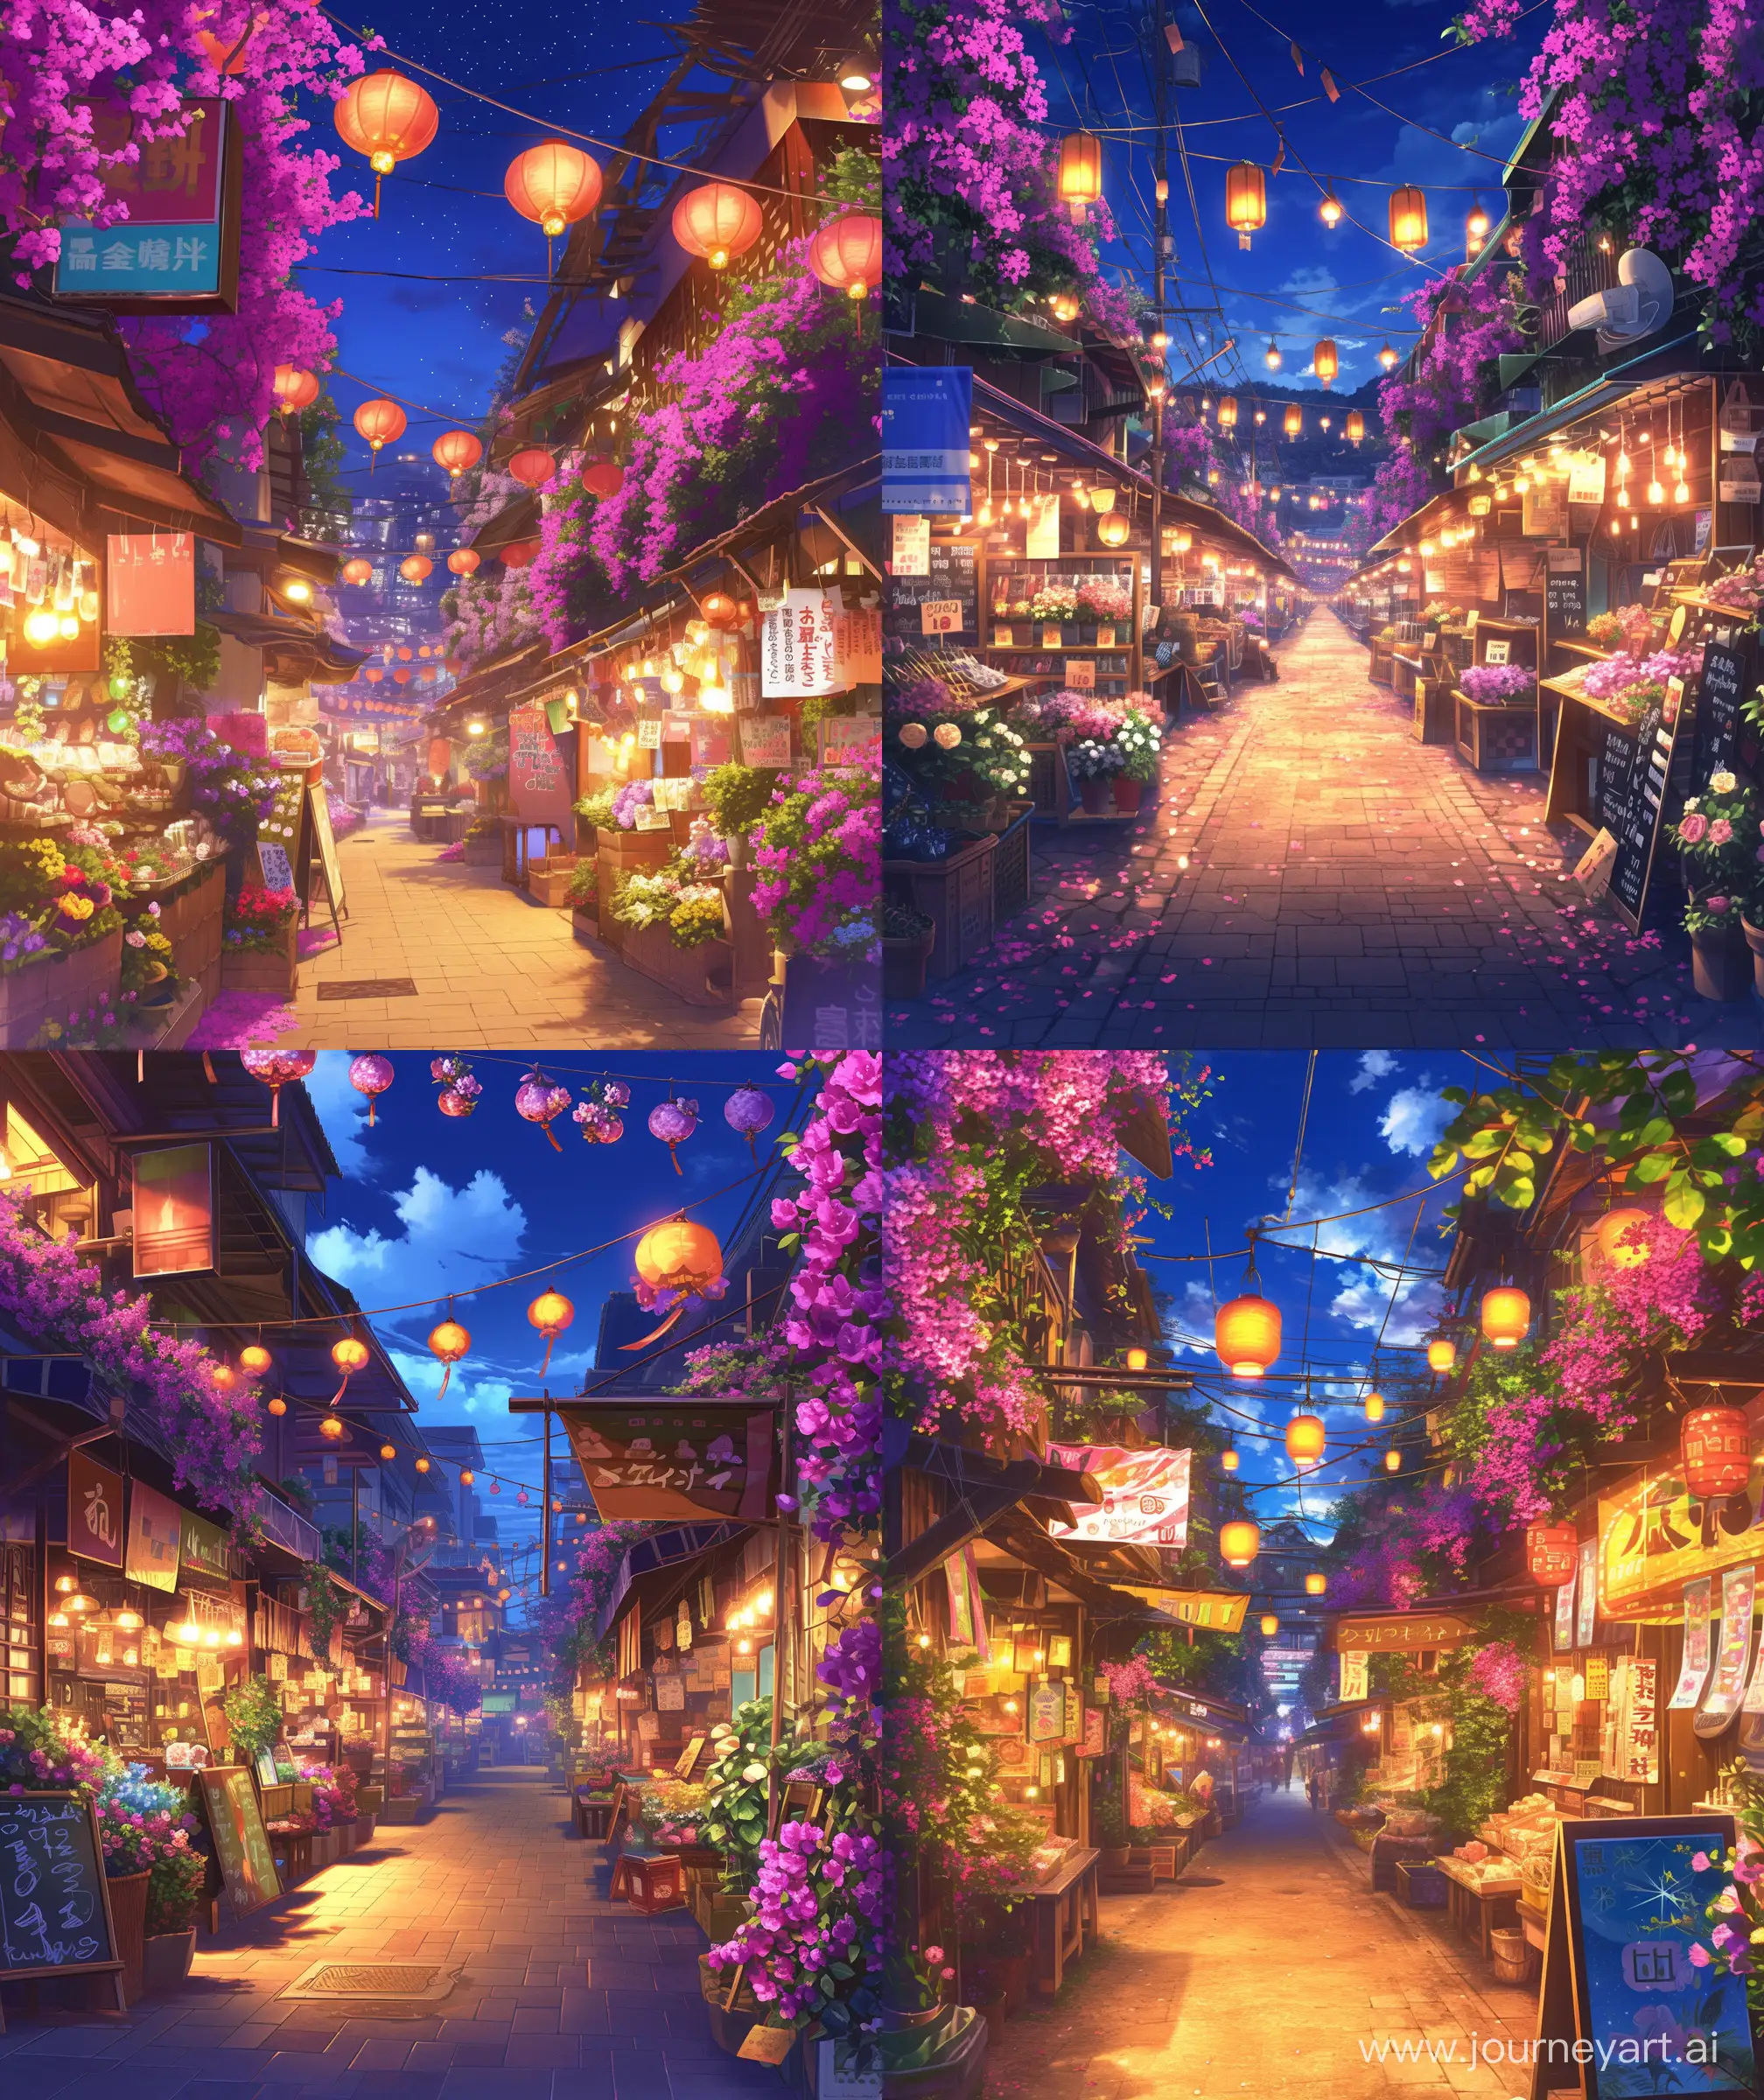 Enchanting-Anime-Night-Market-with-Hanging-Lanterns-and-Vivid-Bougainvillea-Decor